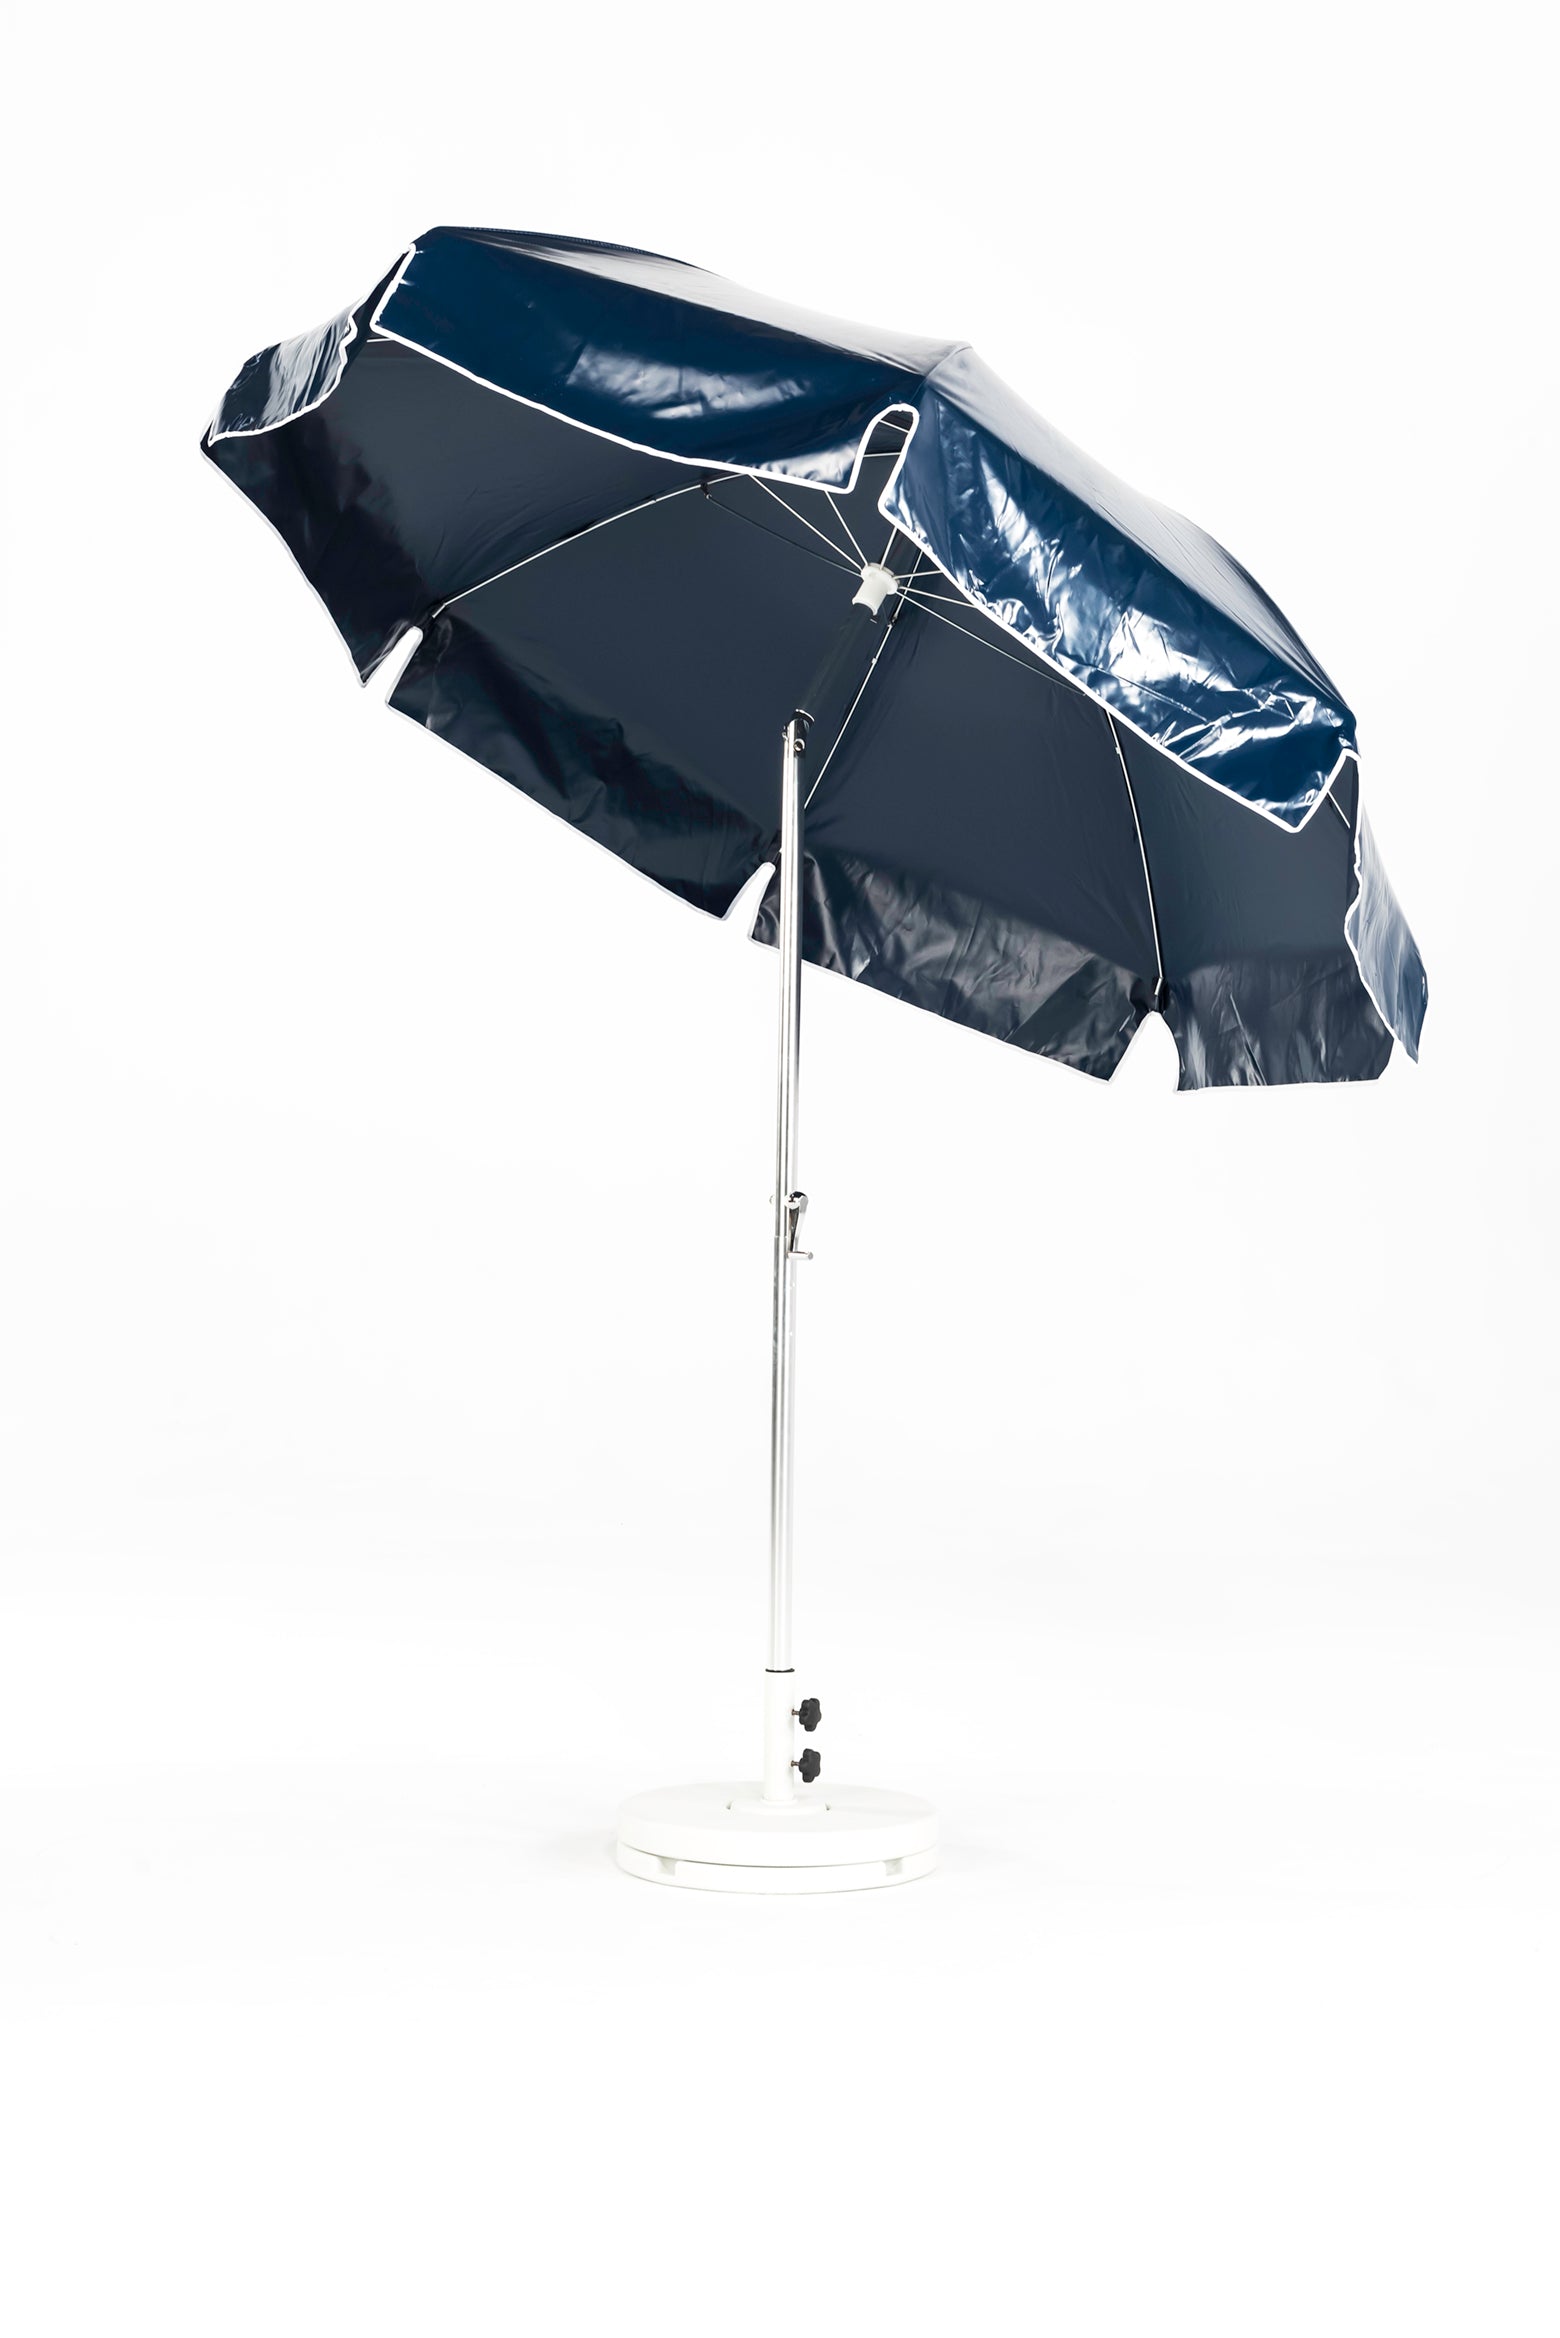 Laurel Steel Patio Umbrella